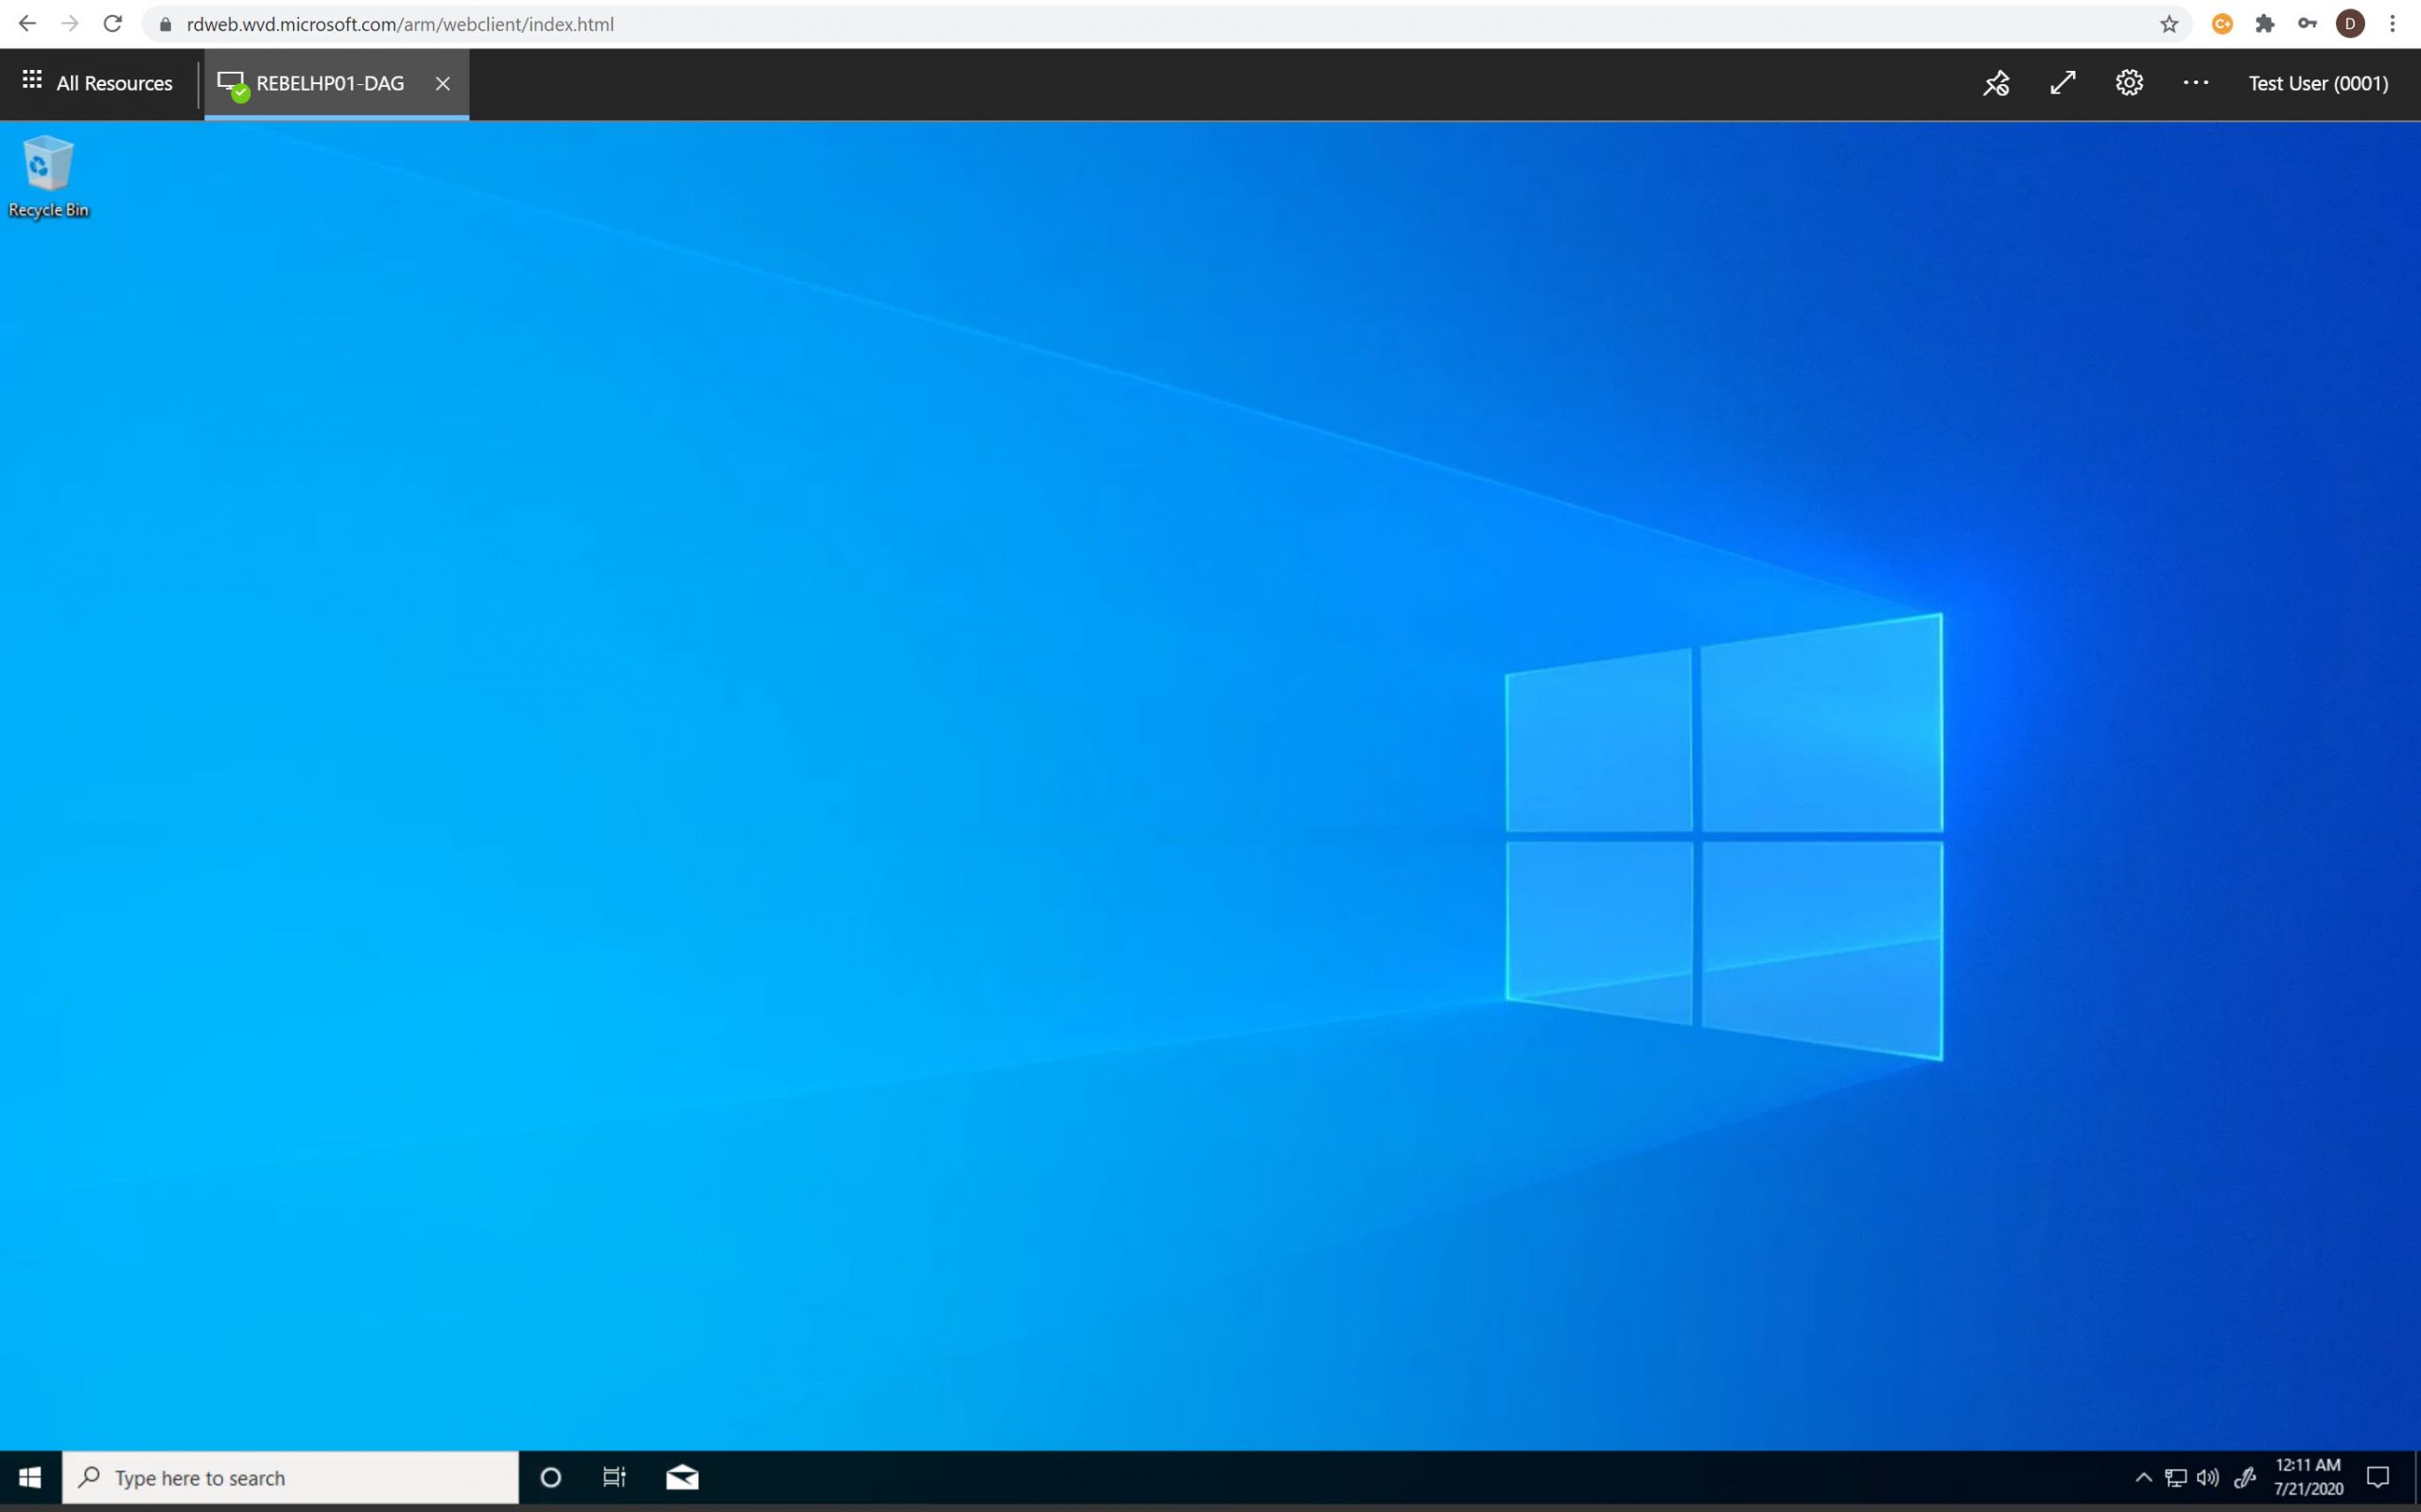 Windows Virtual Desktop session